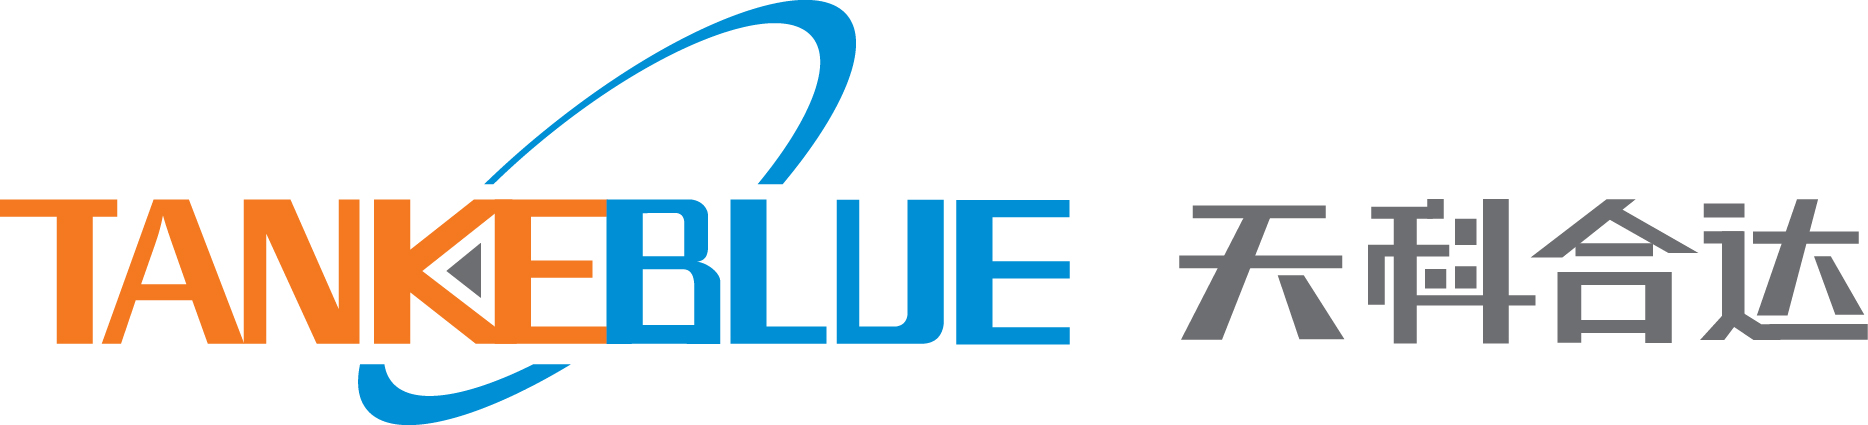 TanKeBlue Logo